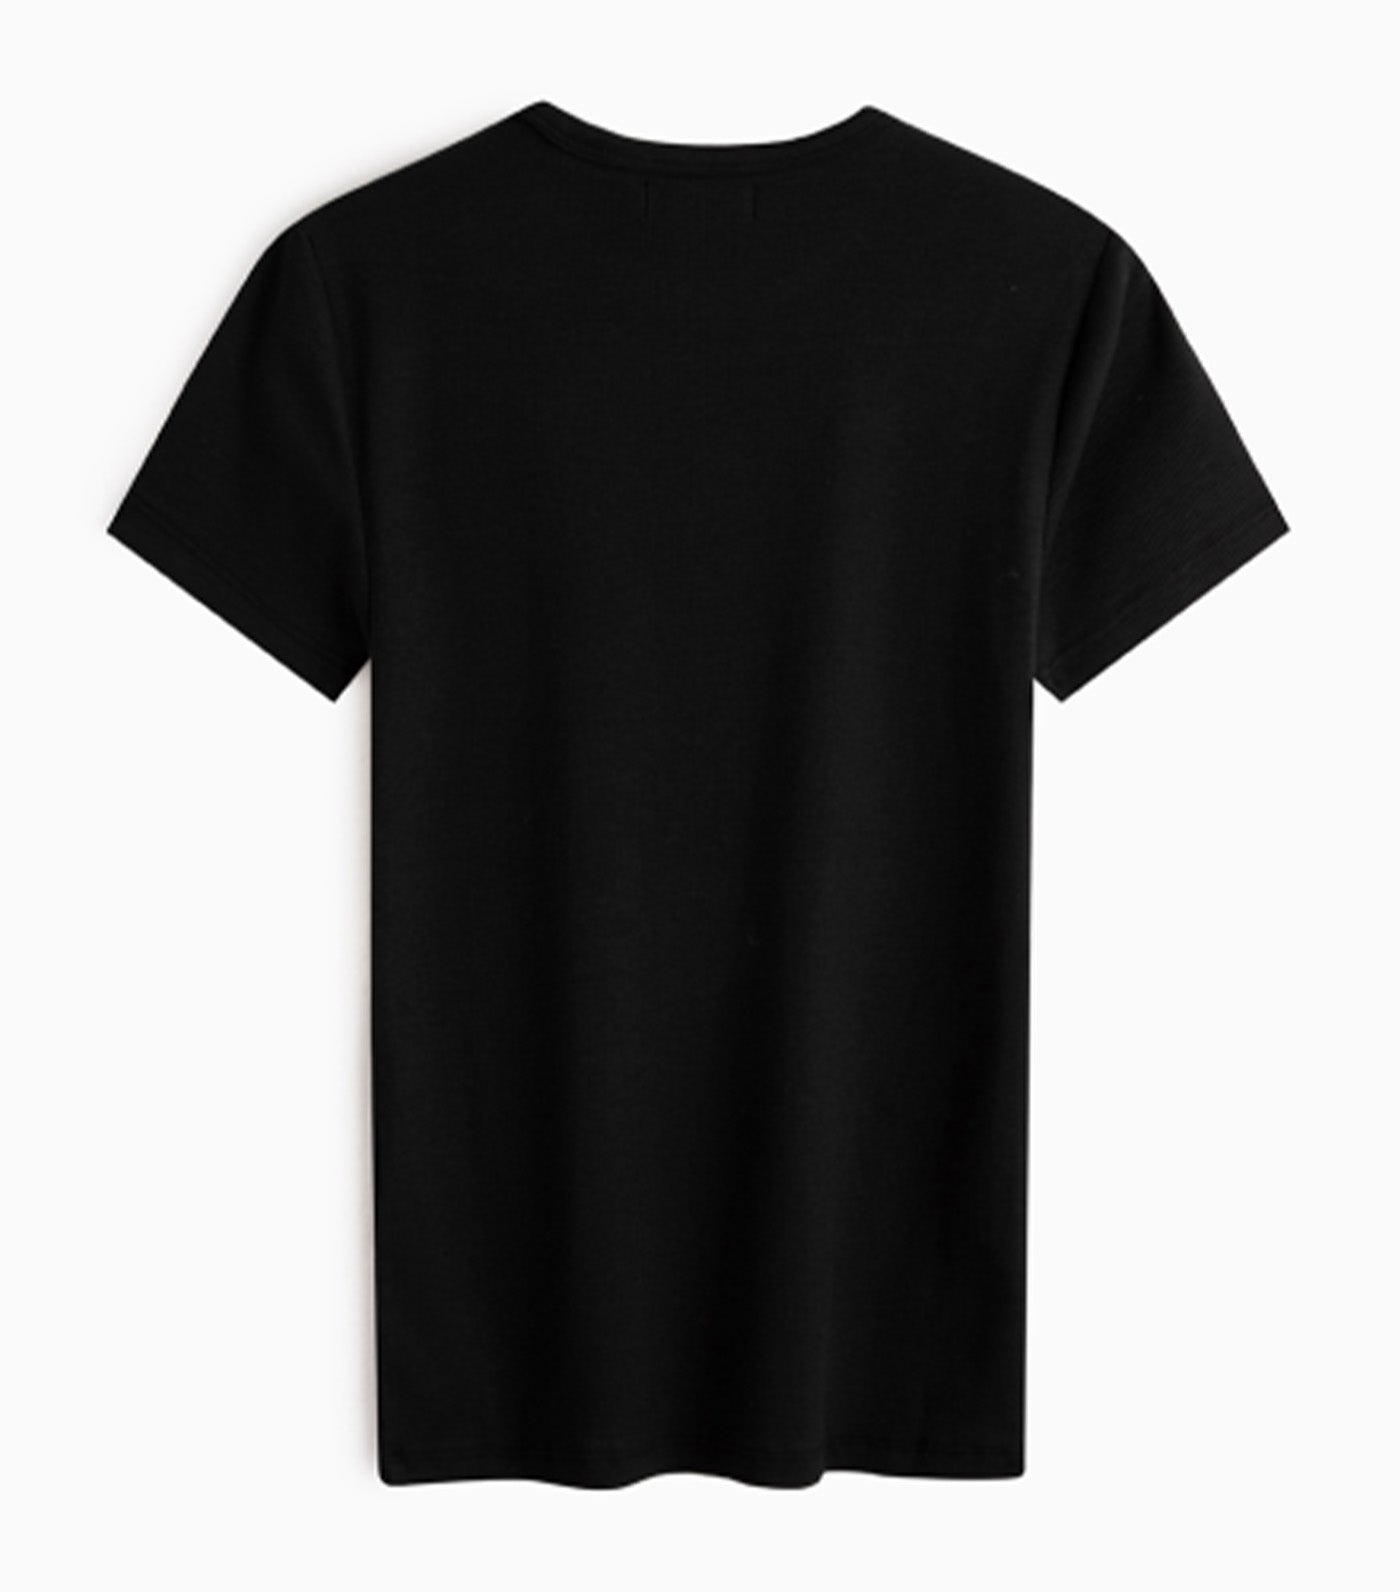 Contour Rib Slim Fit T-Shirt Black Beauty